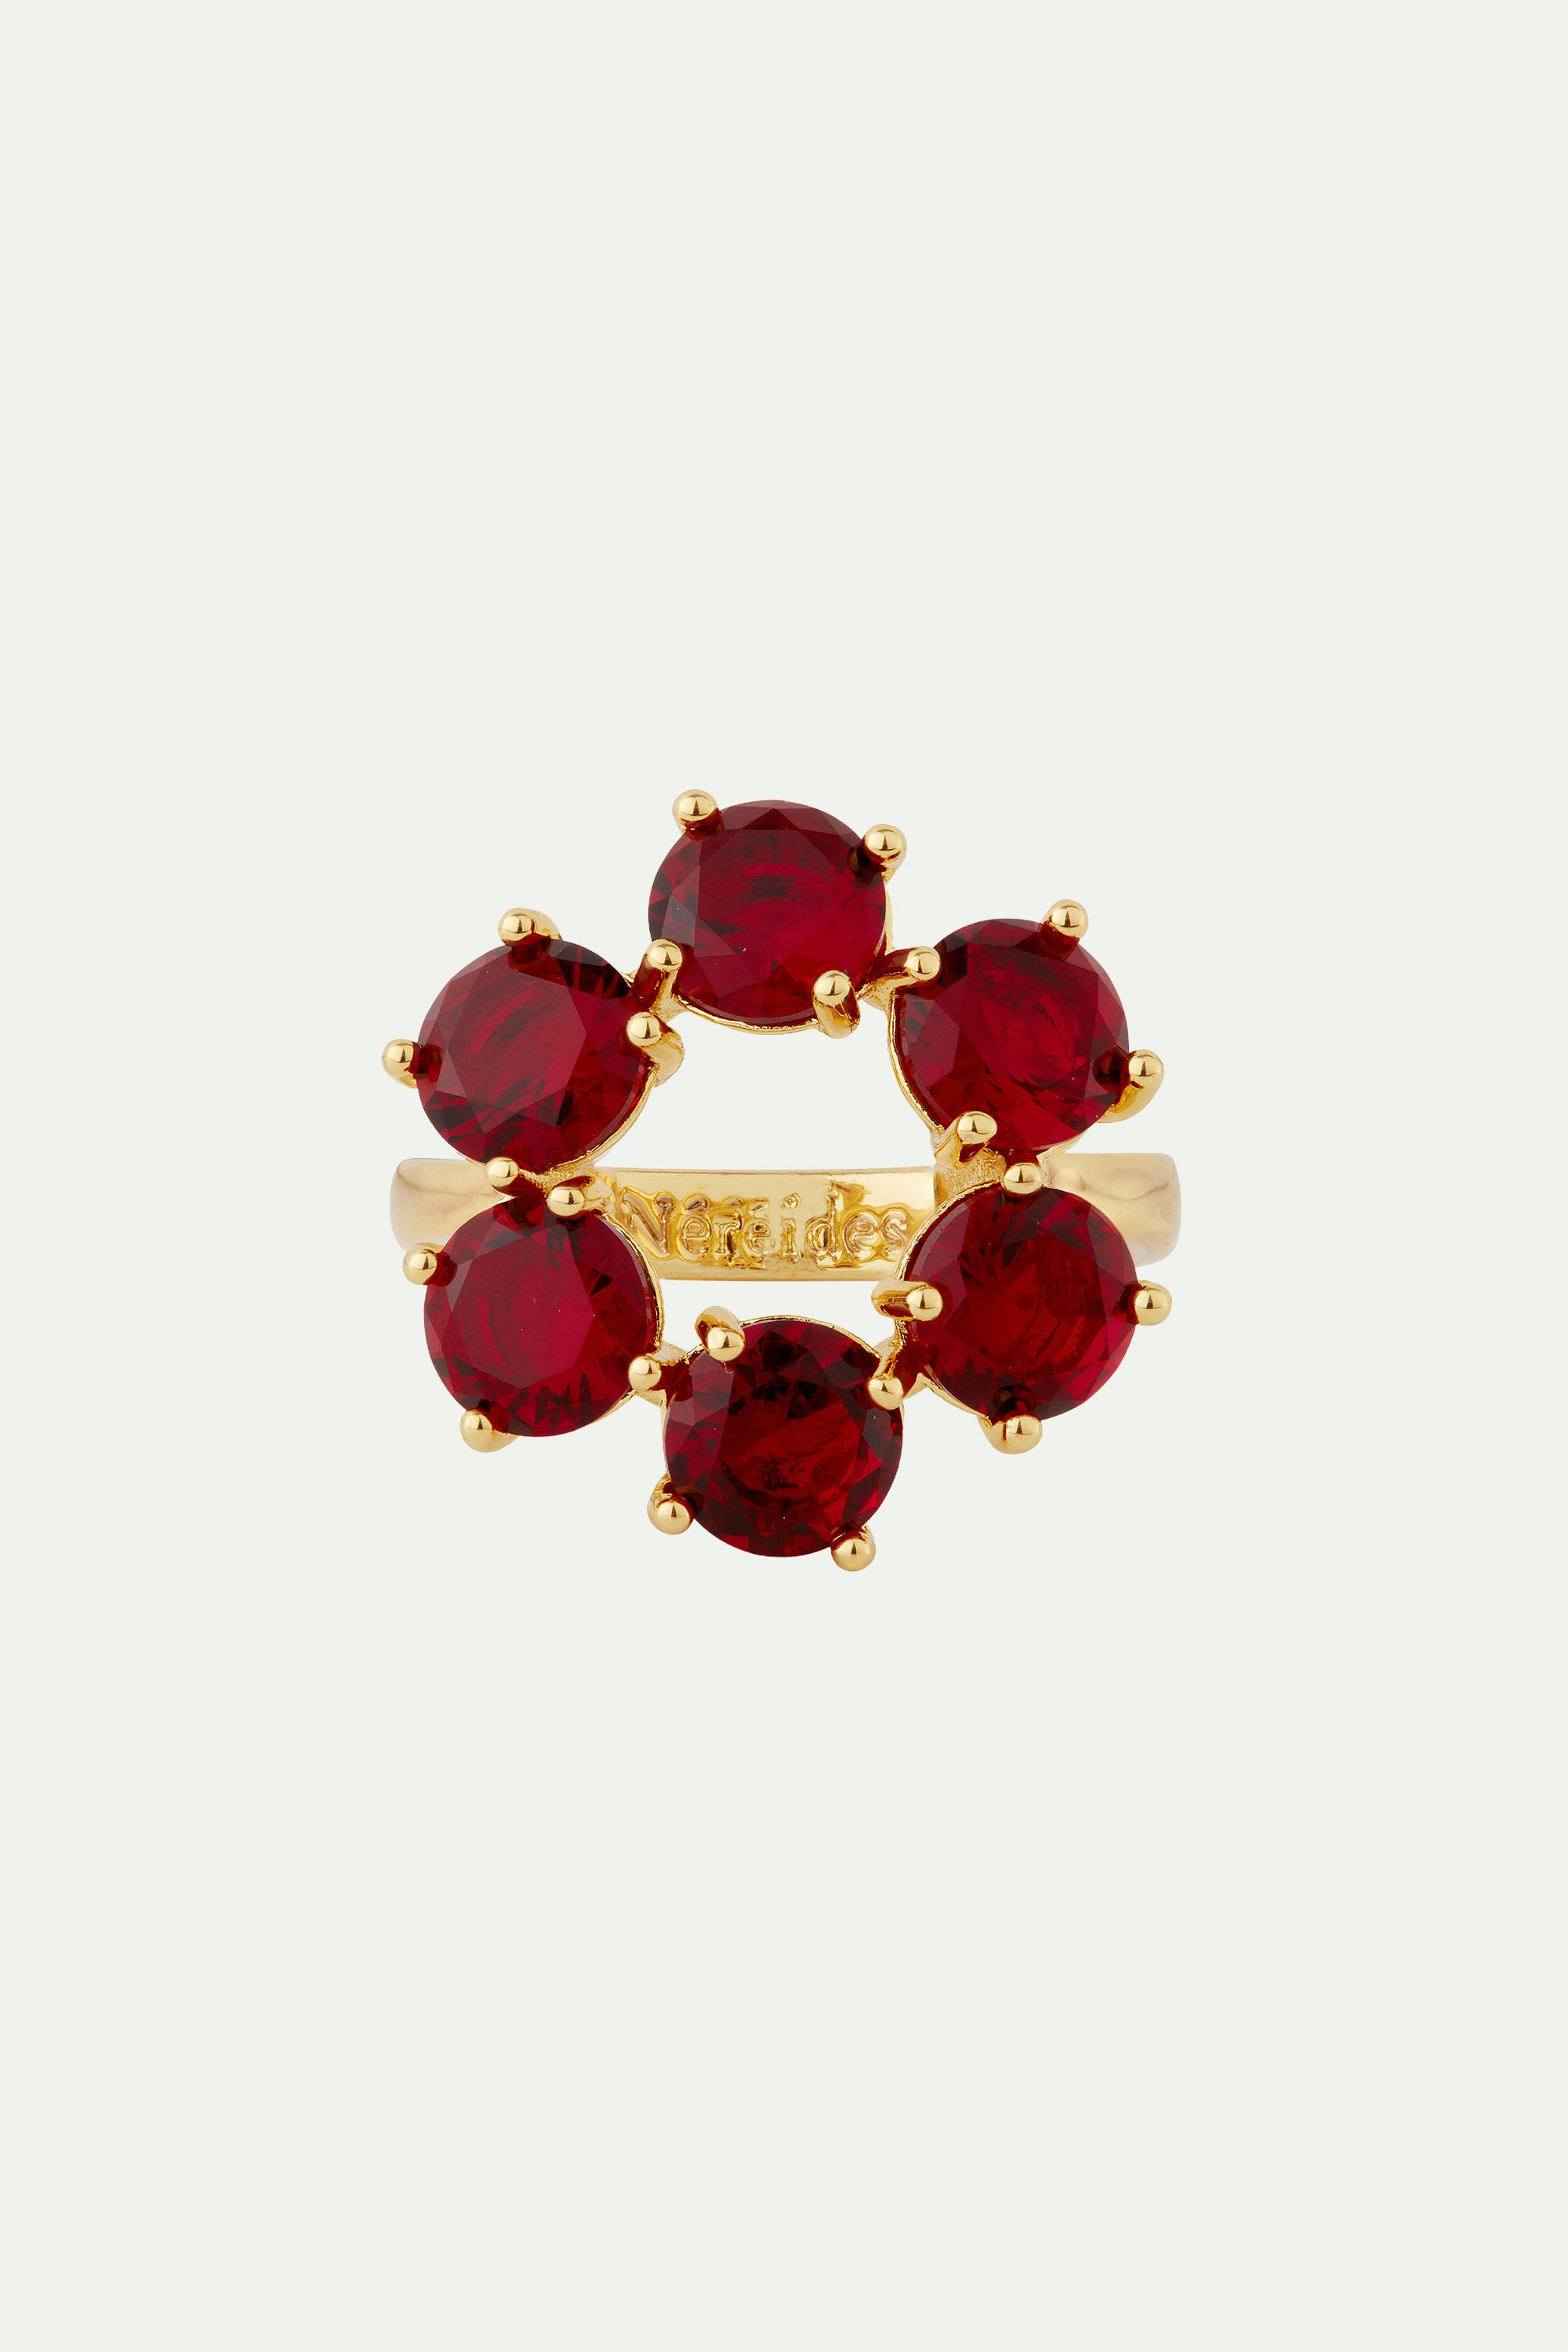 Garnet red 6 stone fine ring